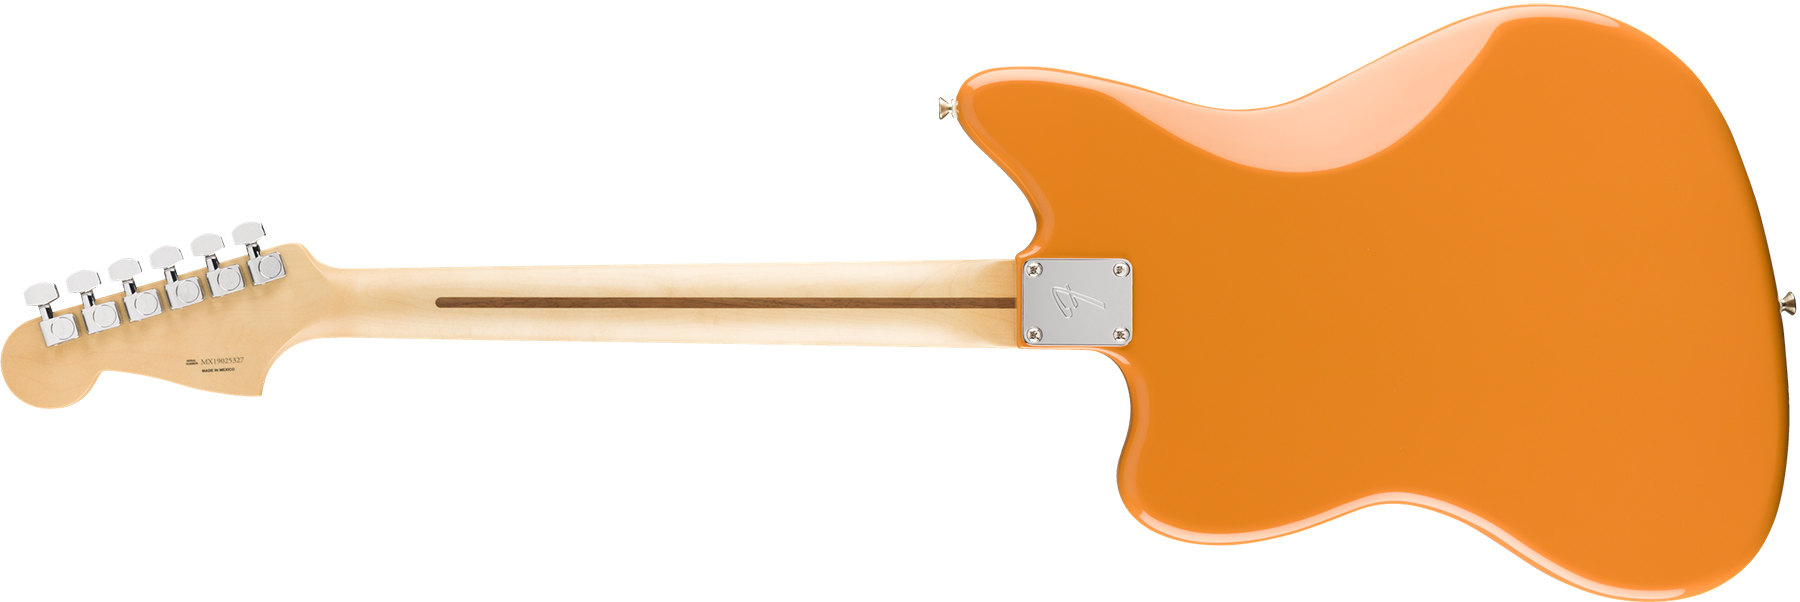 Fender Jazzmaster Player Mex Hh Pf - Capri Orange - Retro-Rock-E-Gitarre - Variation 1